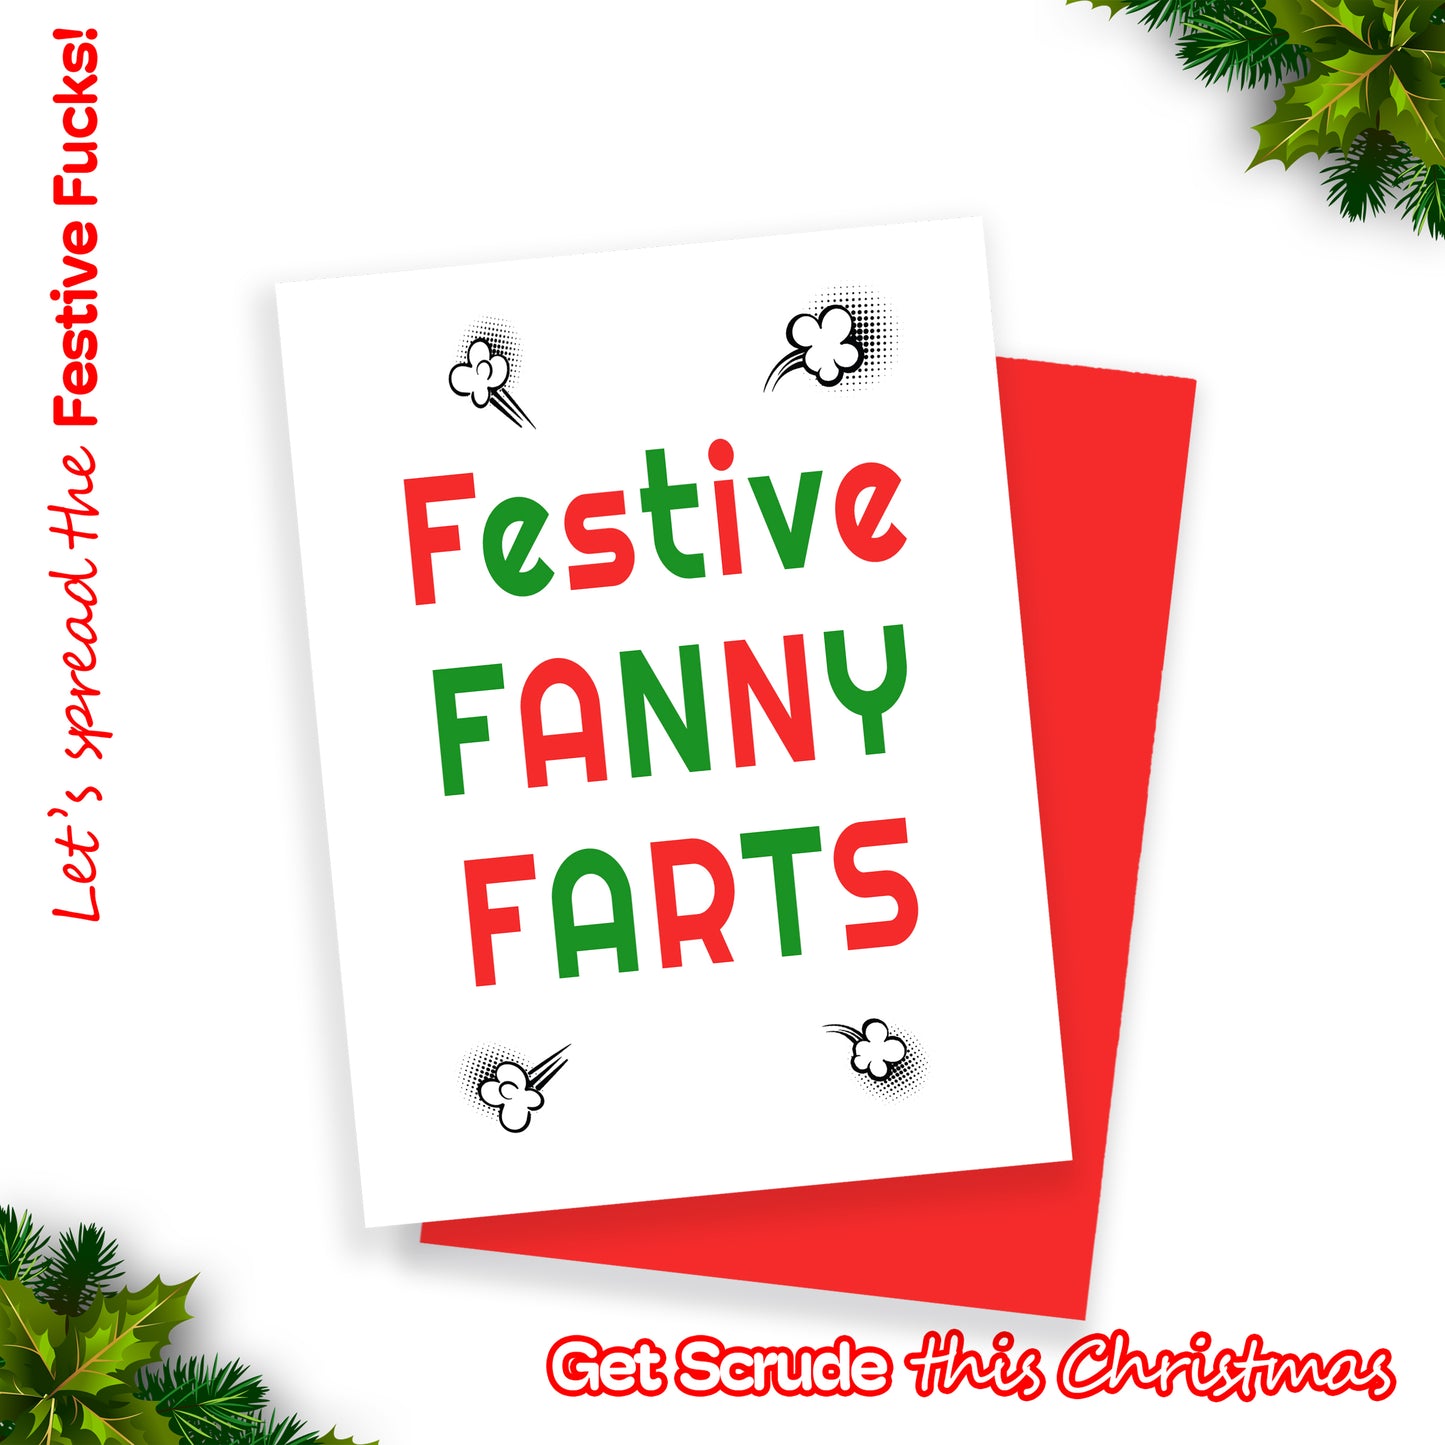 Festive Fanny Farts